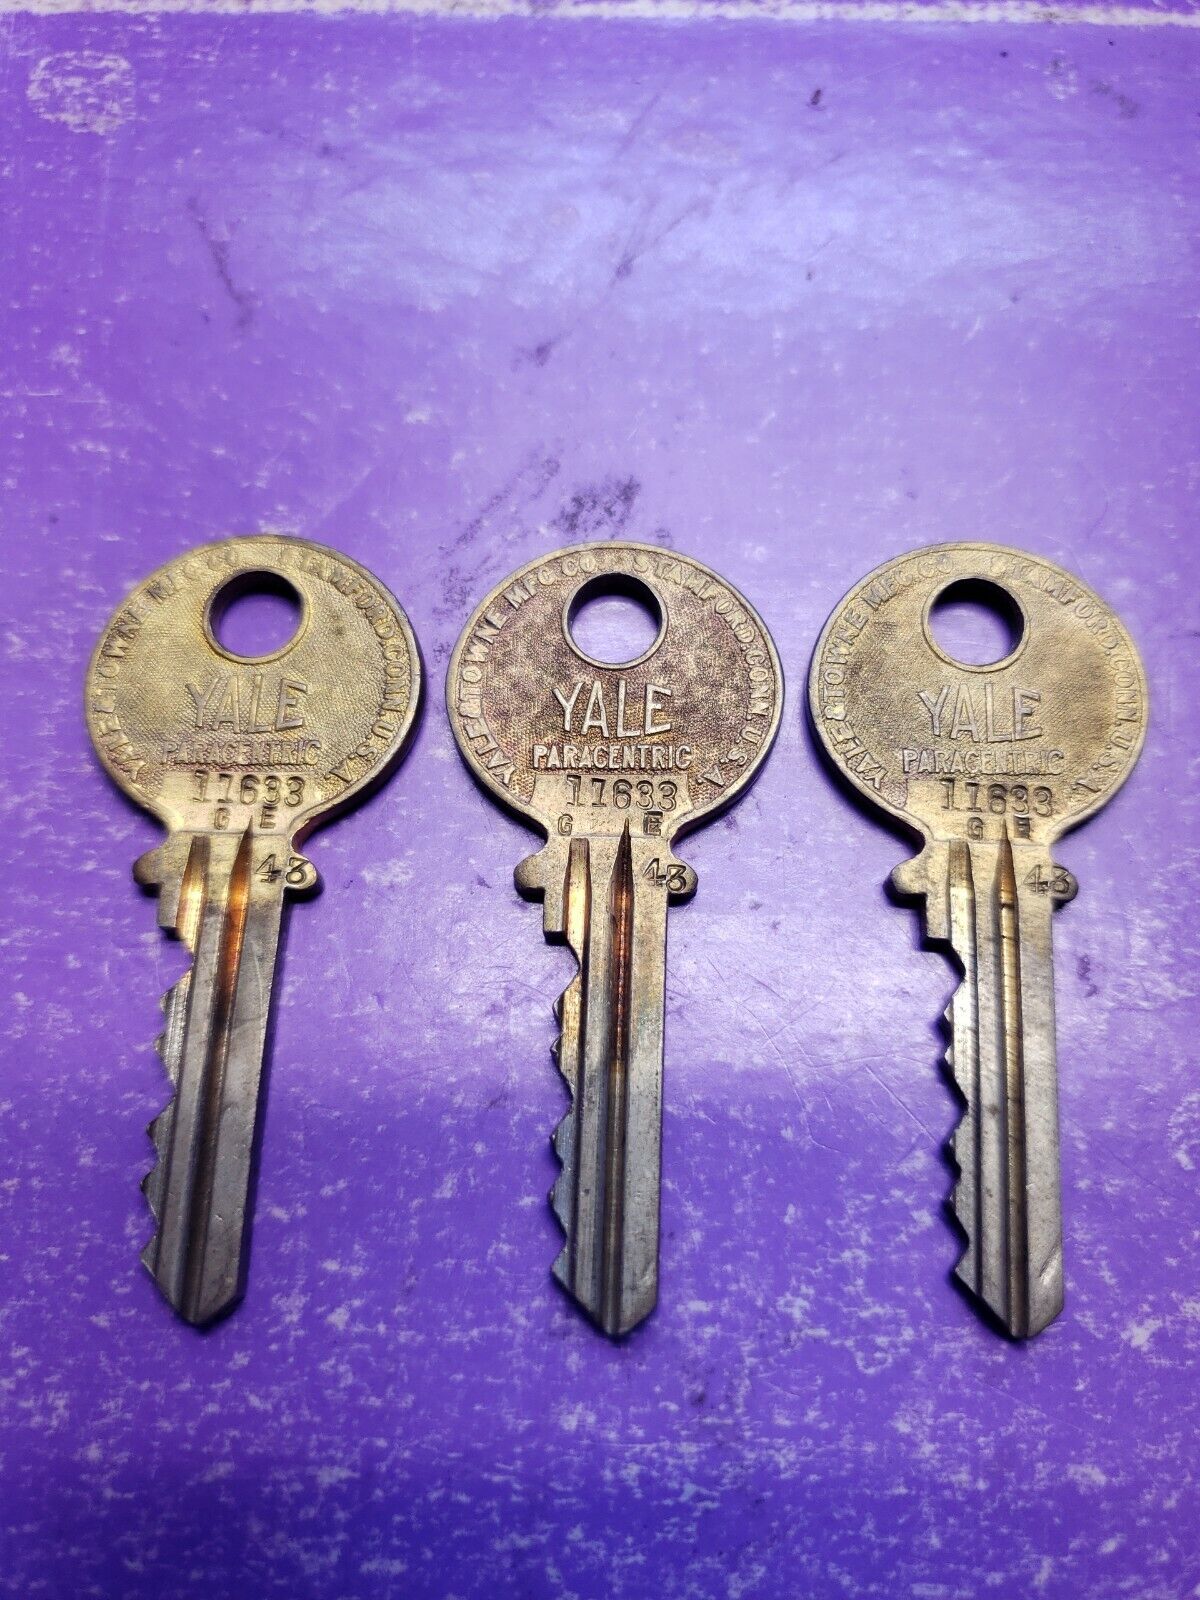 3 MATCHING Yale keyed ORIGINAL PARACENTRIC SECURITY KEYS  GE 43 #11633